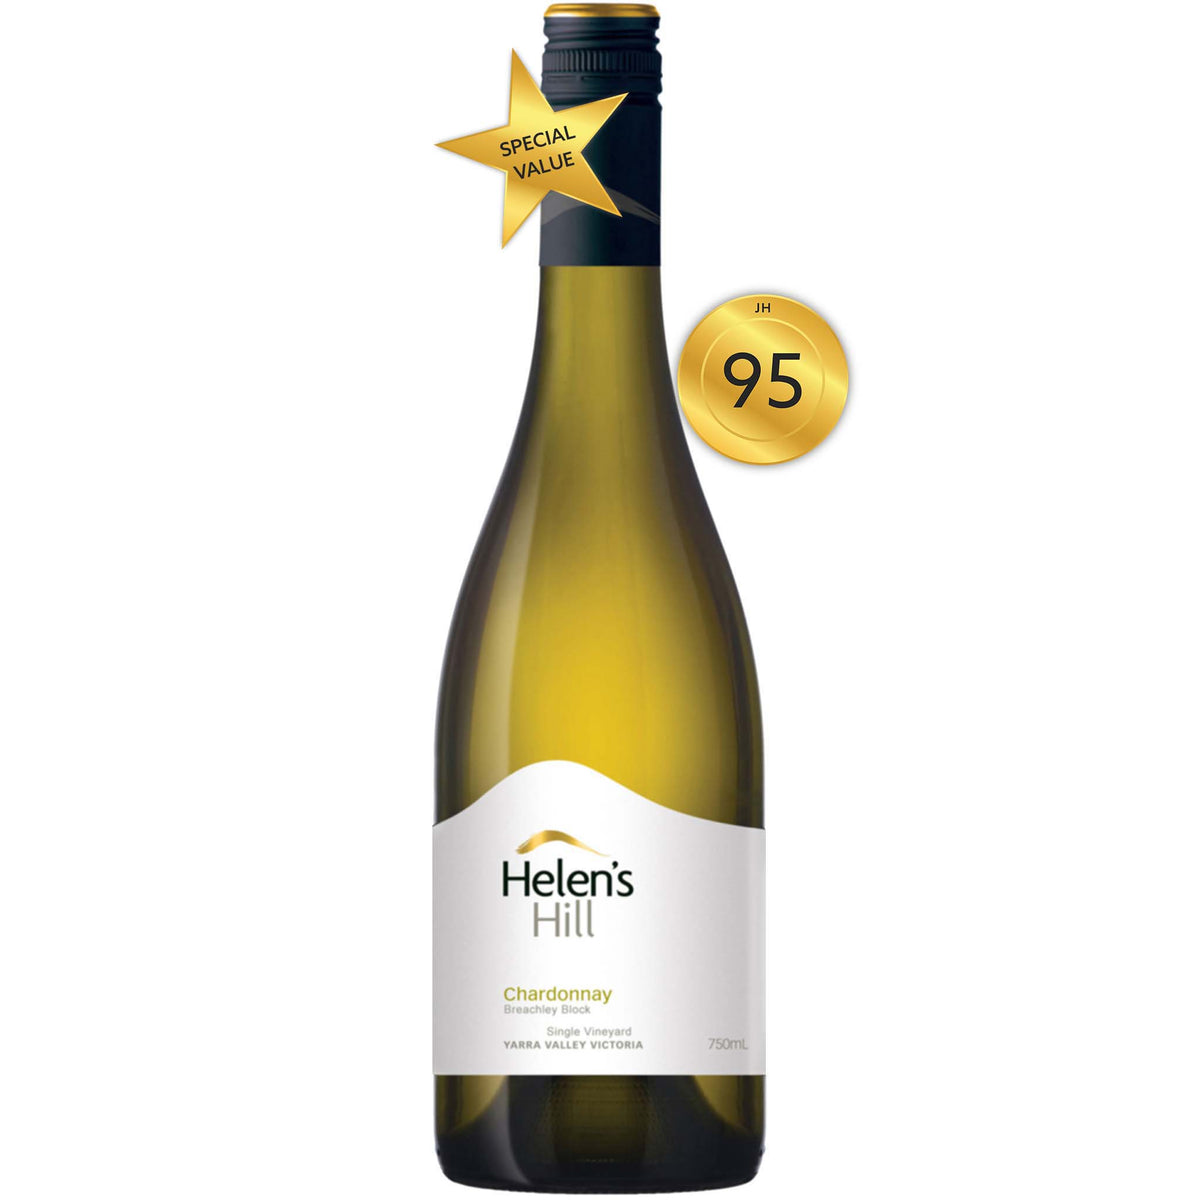 Helen's Hill Estate Breachley Block Single Vineyard Chardonnay 2015